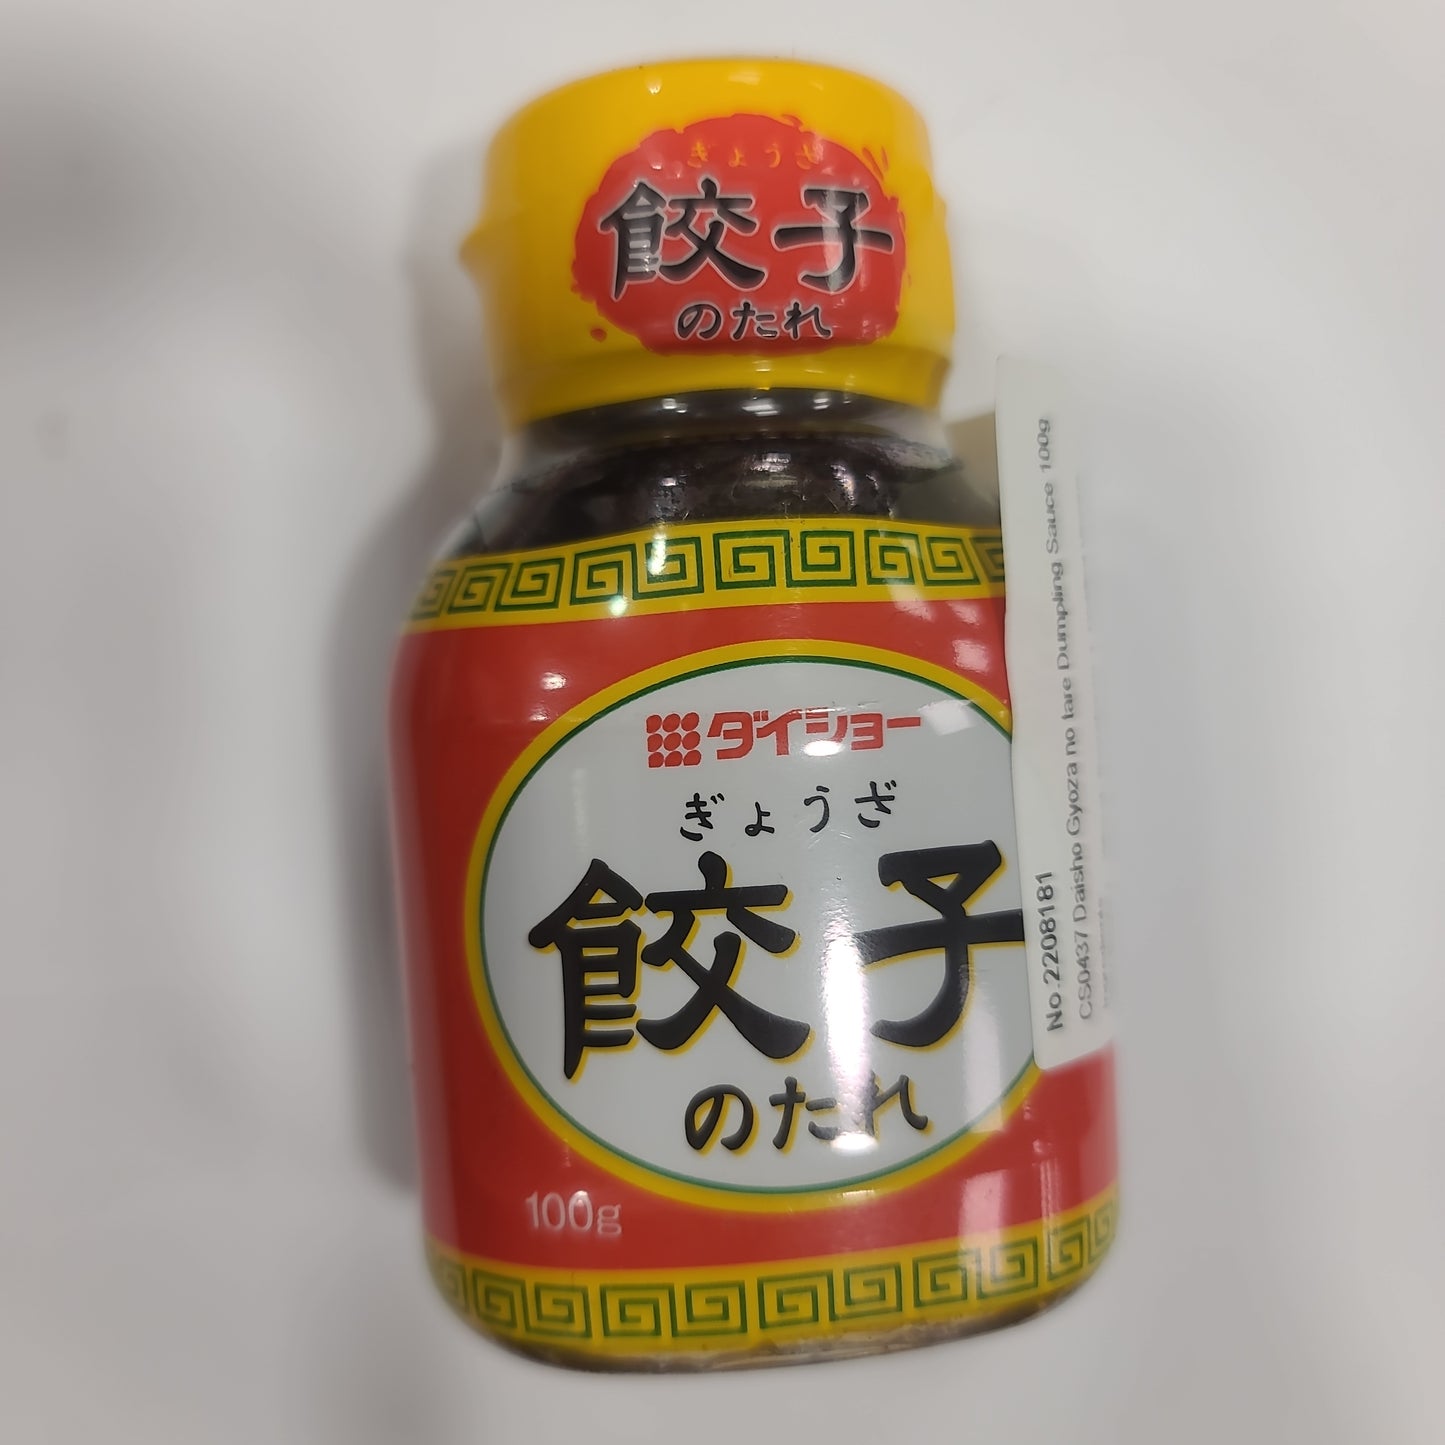 Daisho Gyoza Dumpling Sauce 100g